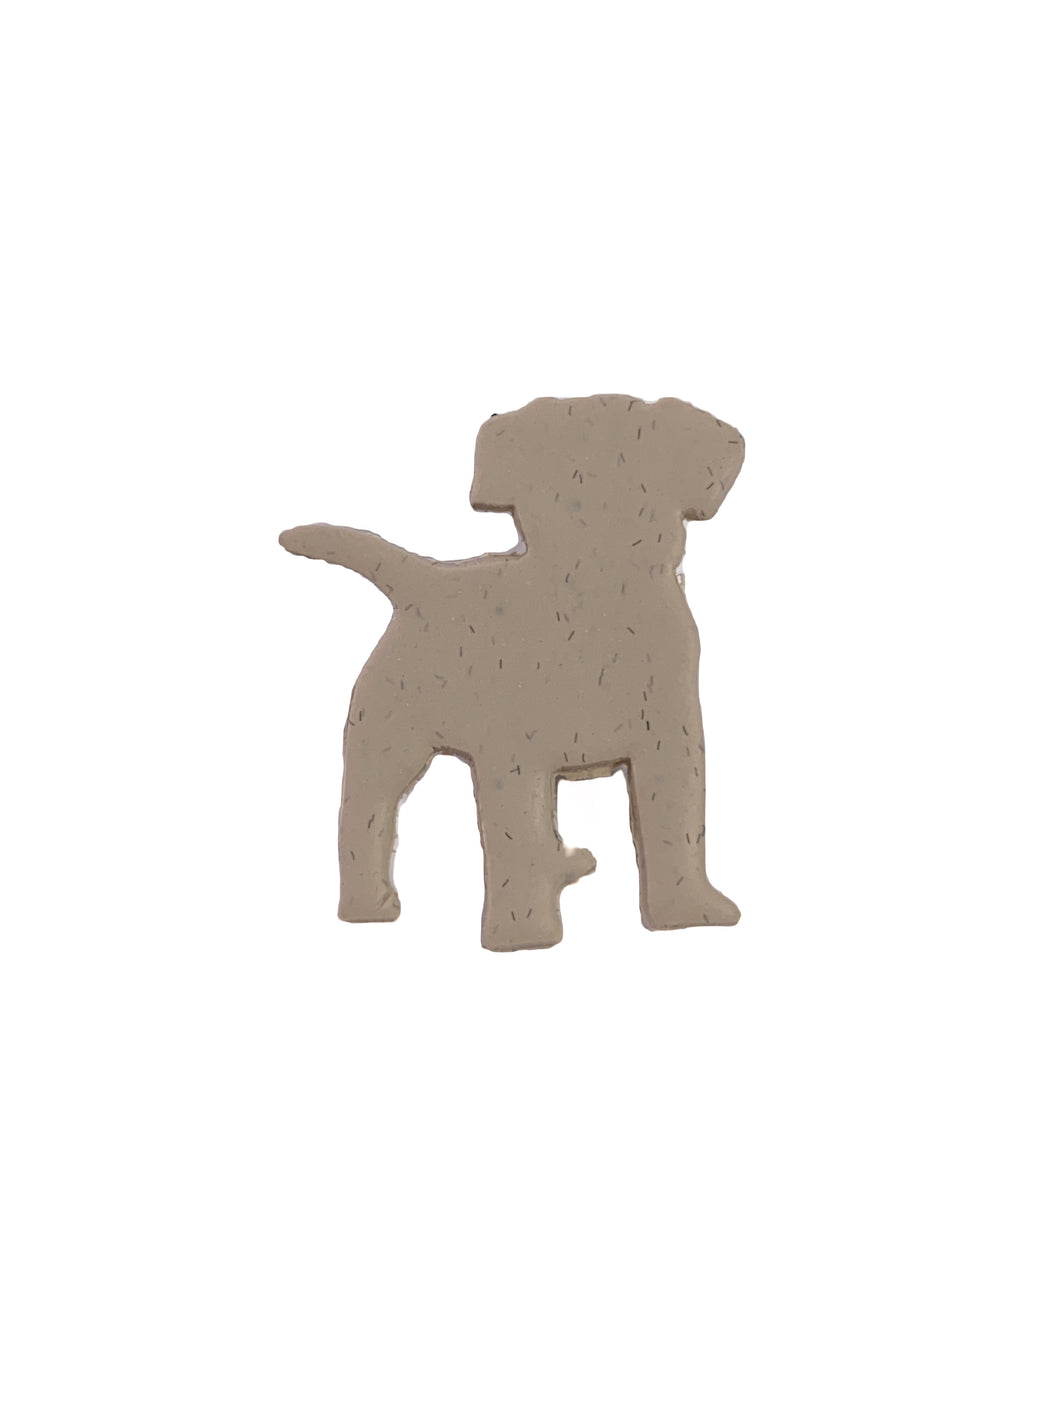 Dog polymer clay pin